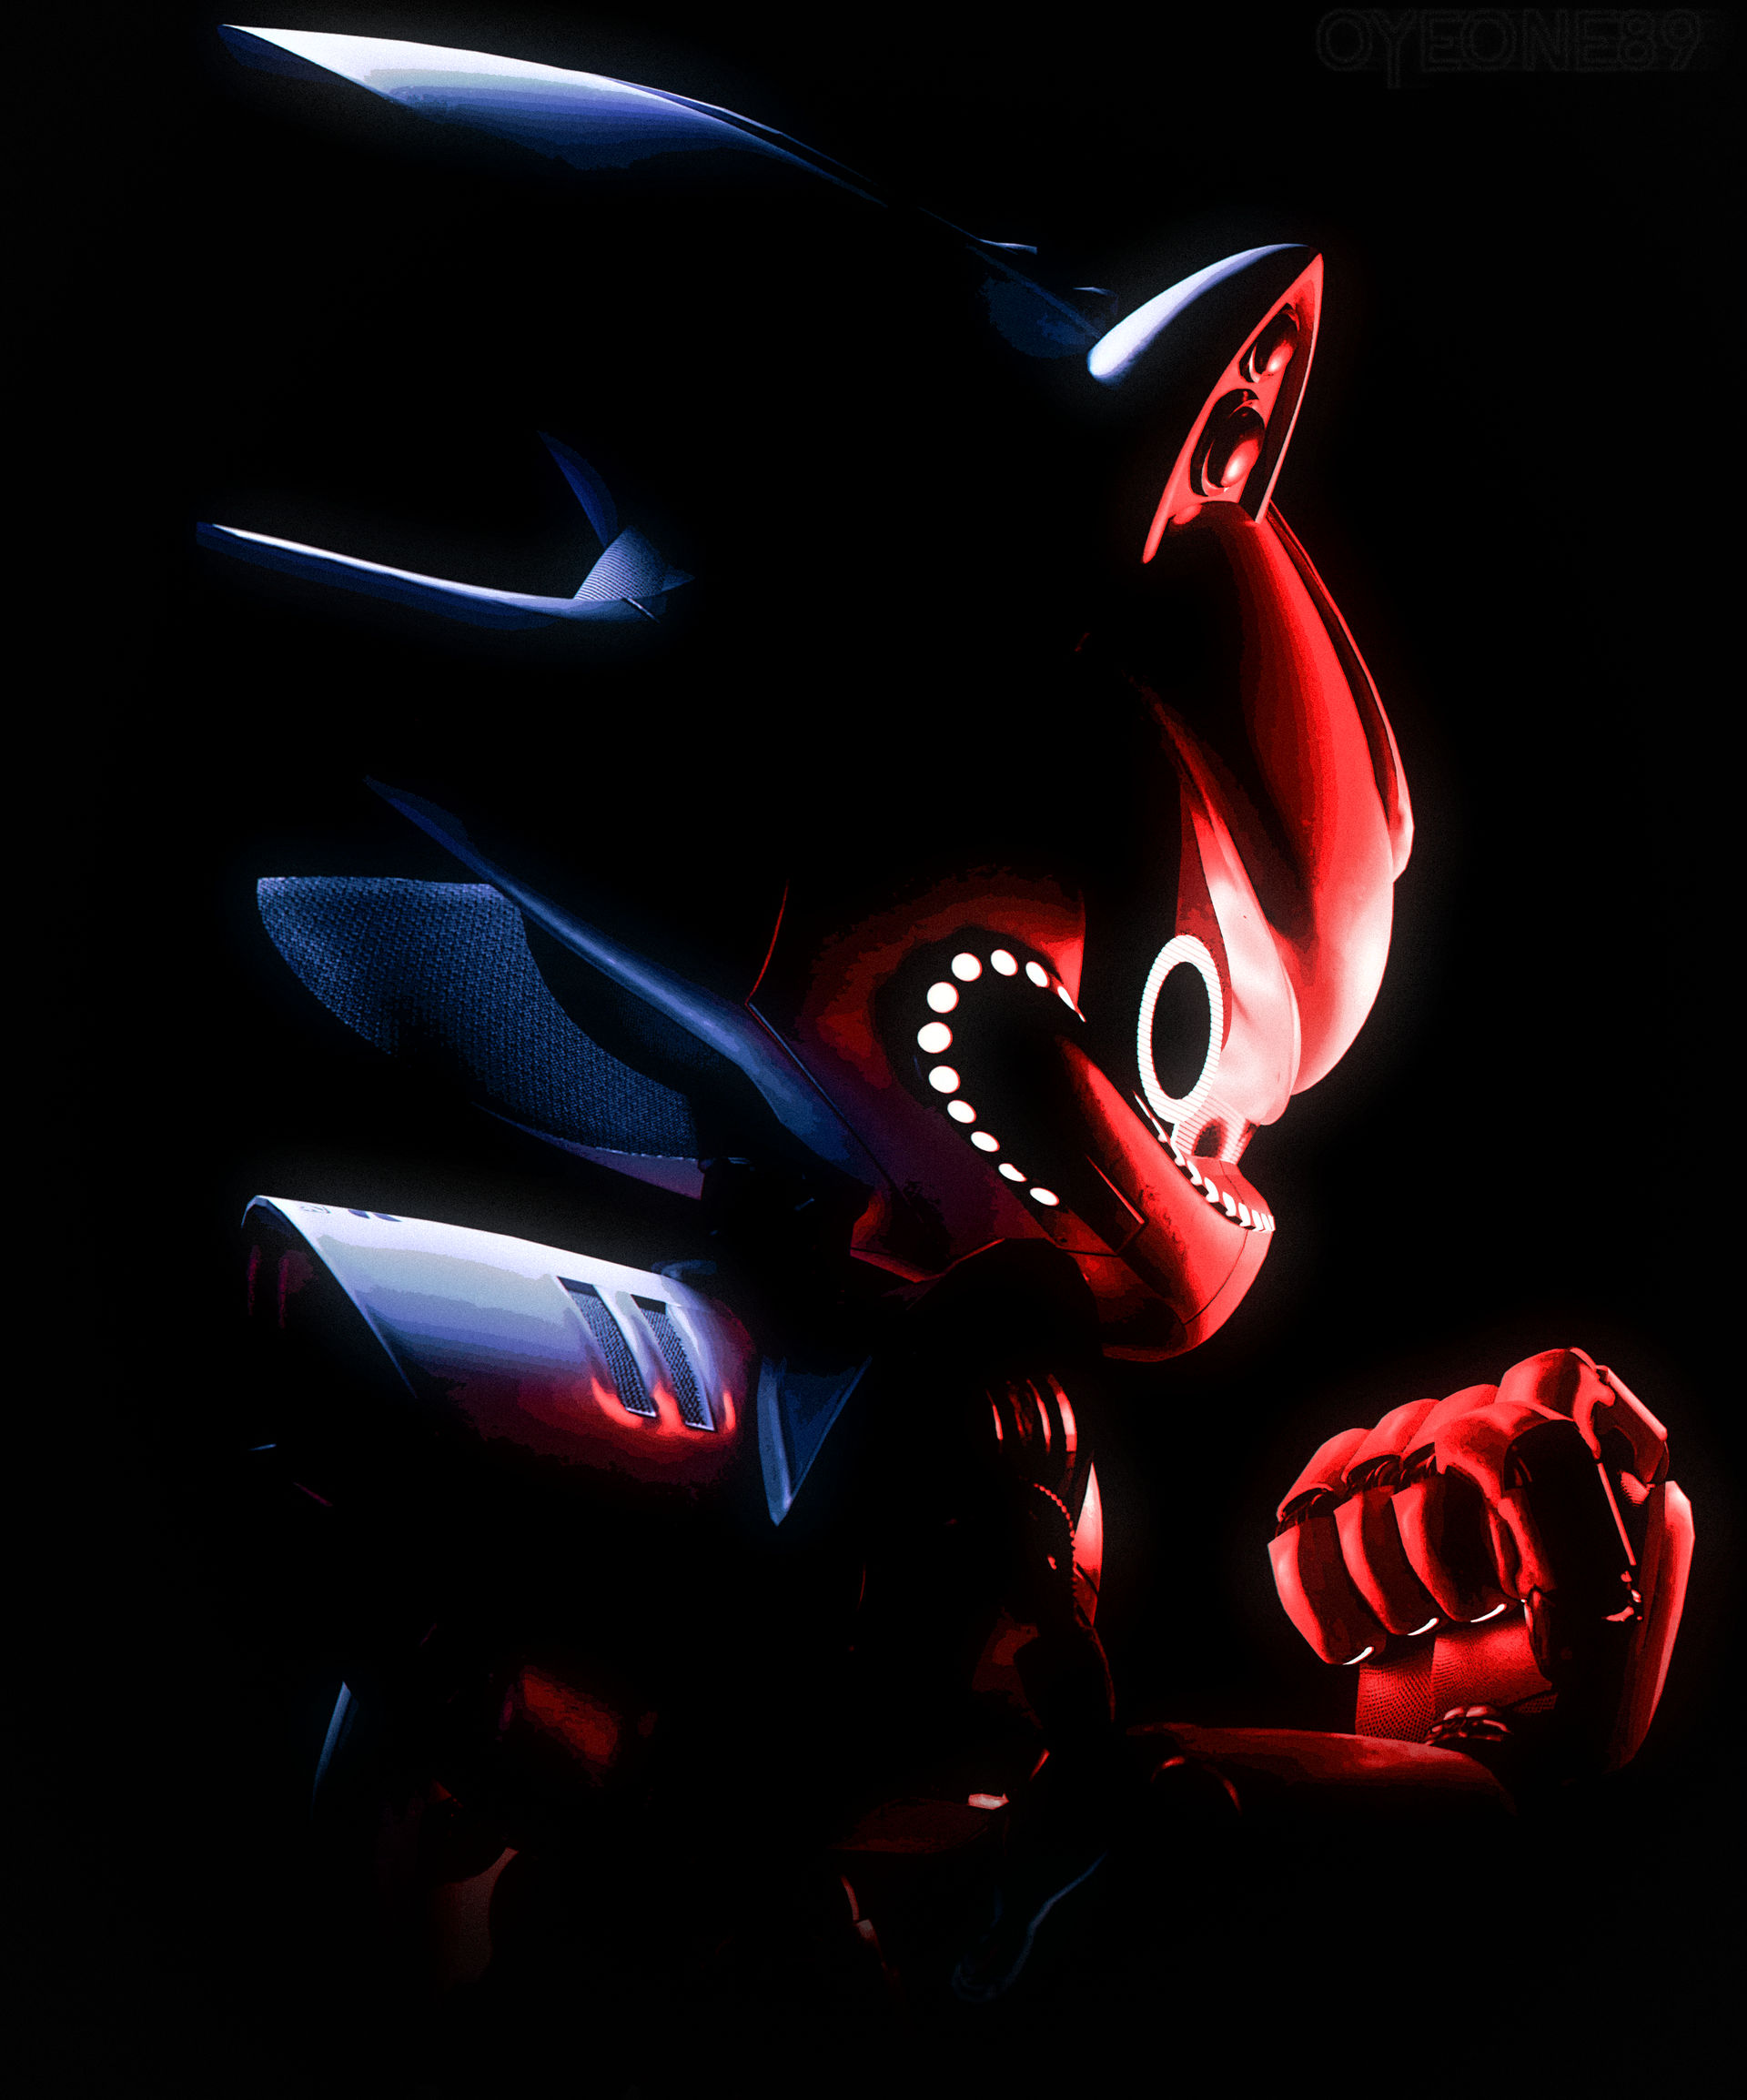 Sonic Movie 3 - Shadow The Hedgehog by OYEone89 on DeviantArt